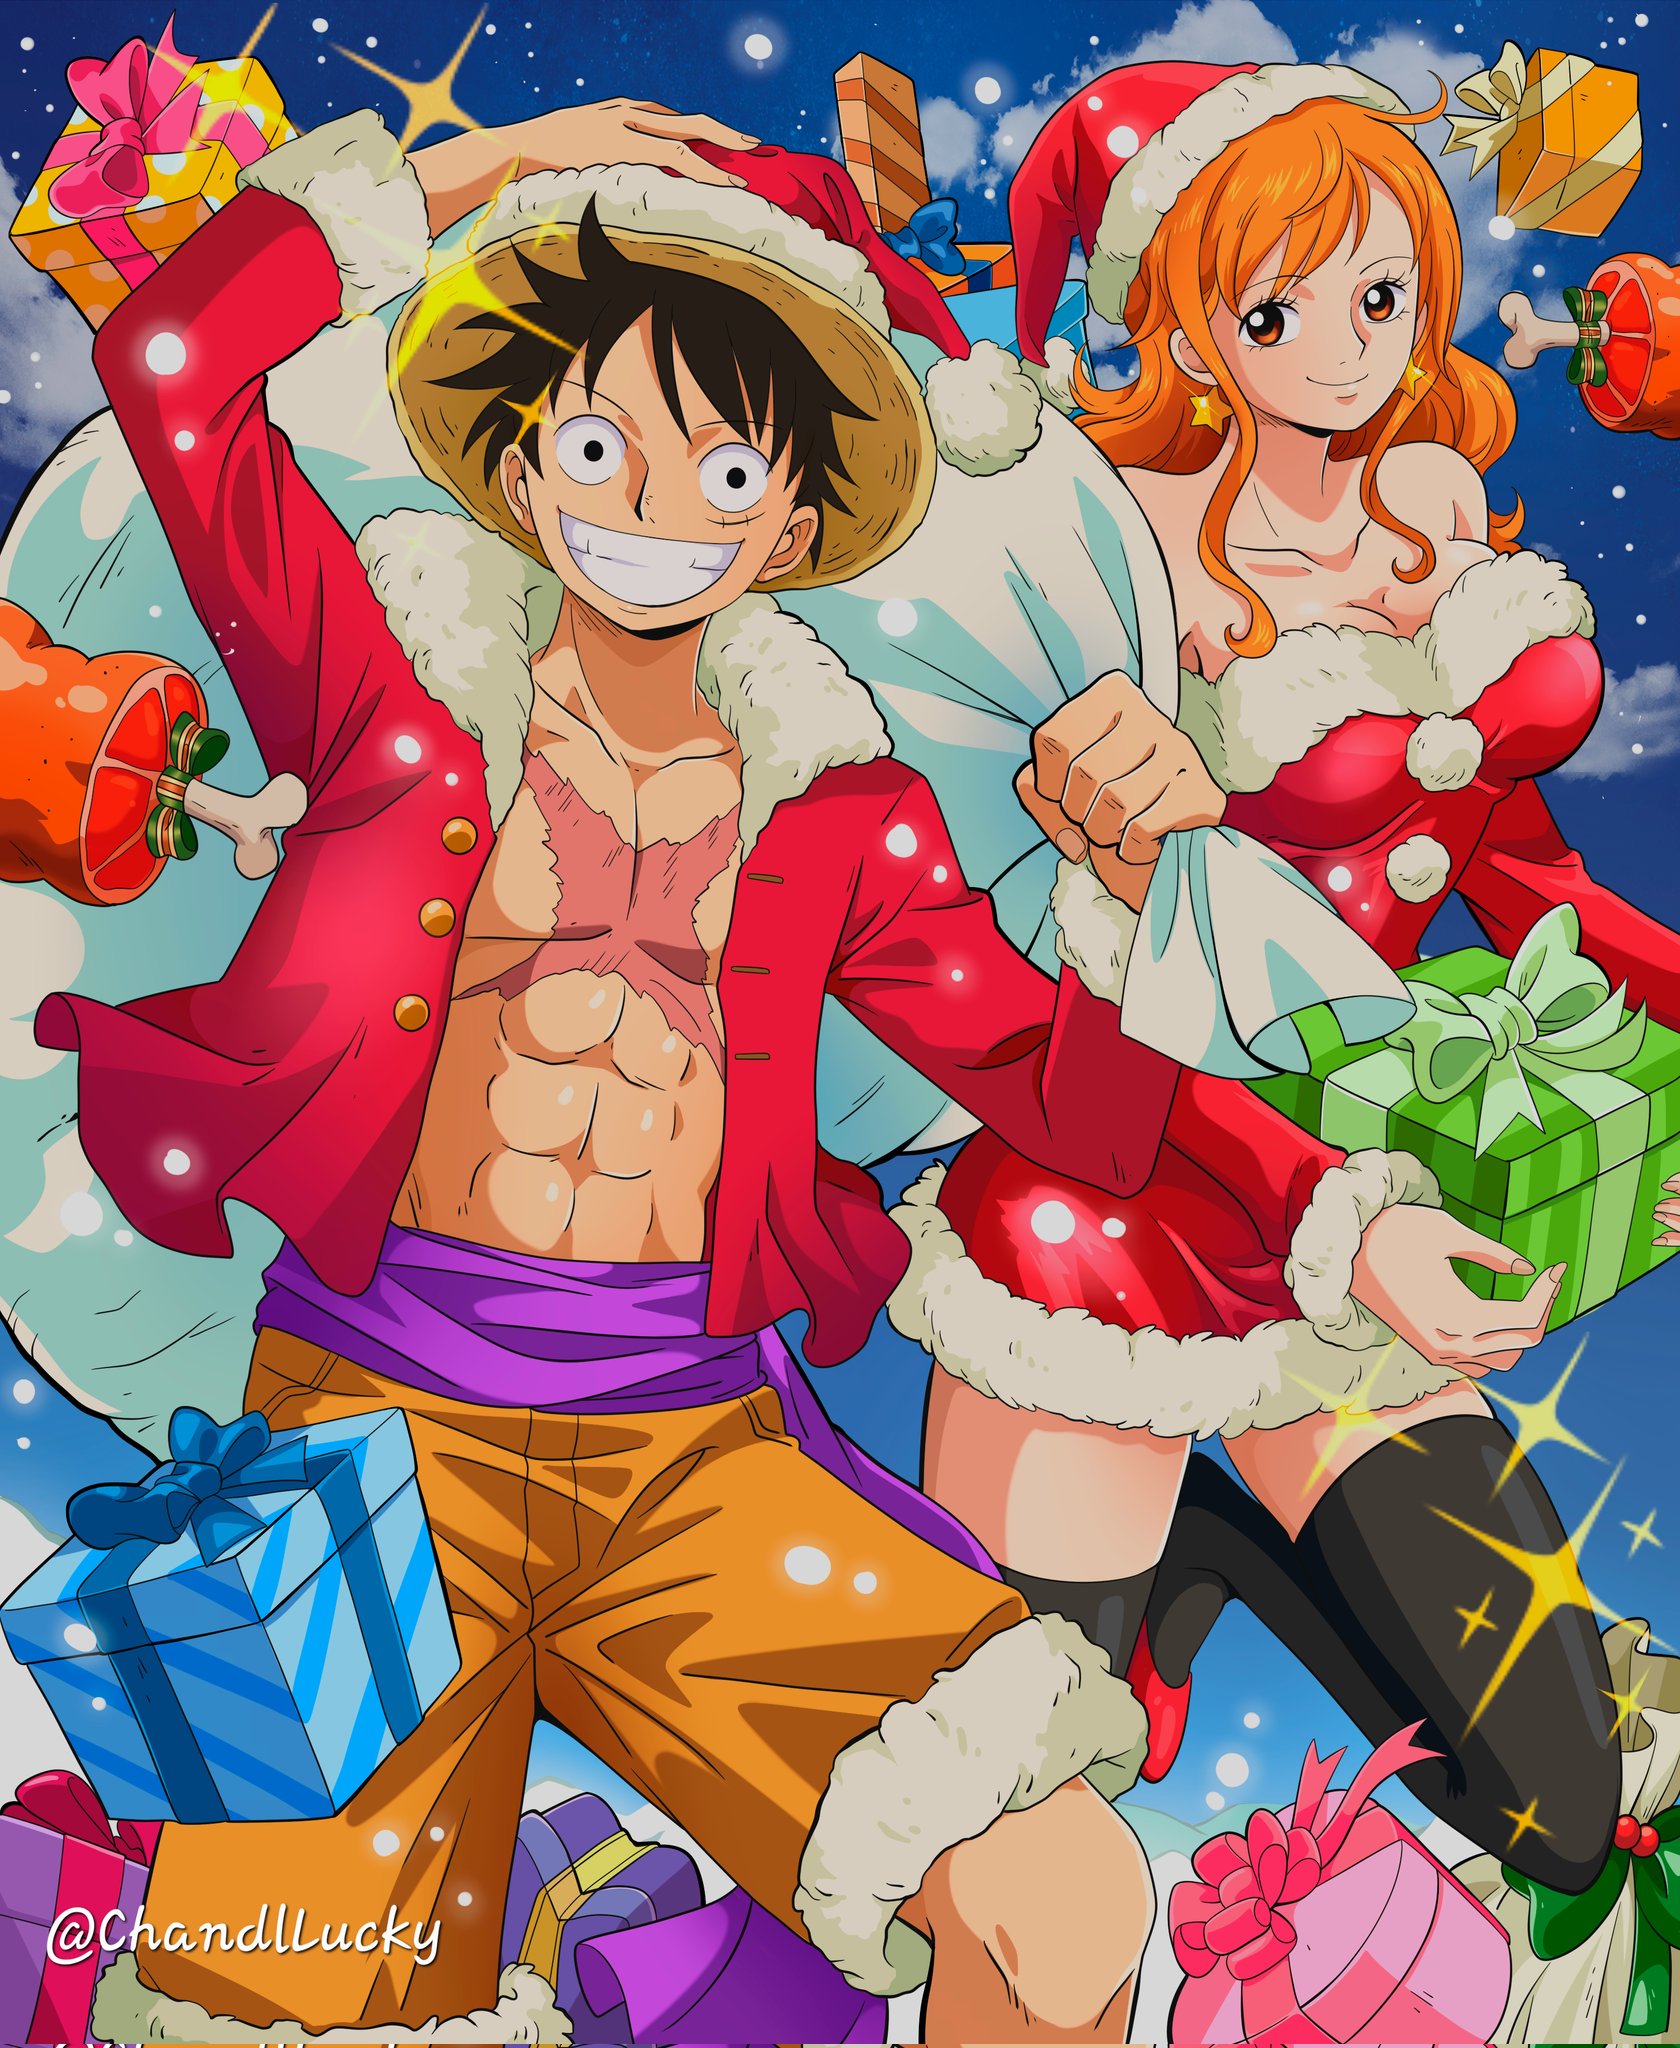 Custom One Piece Decor Will Brighten Up Your Holidays